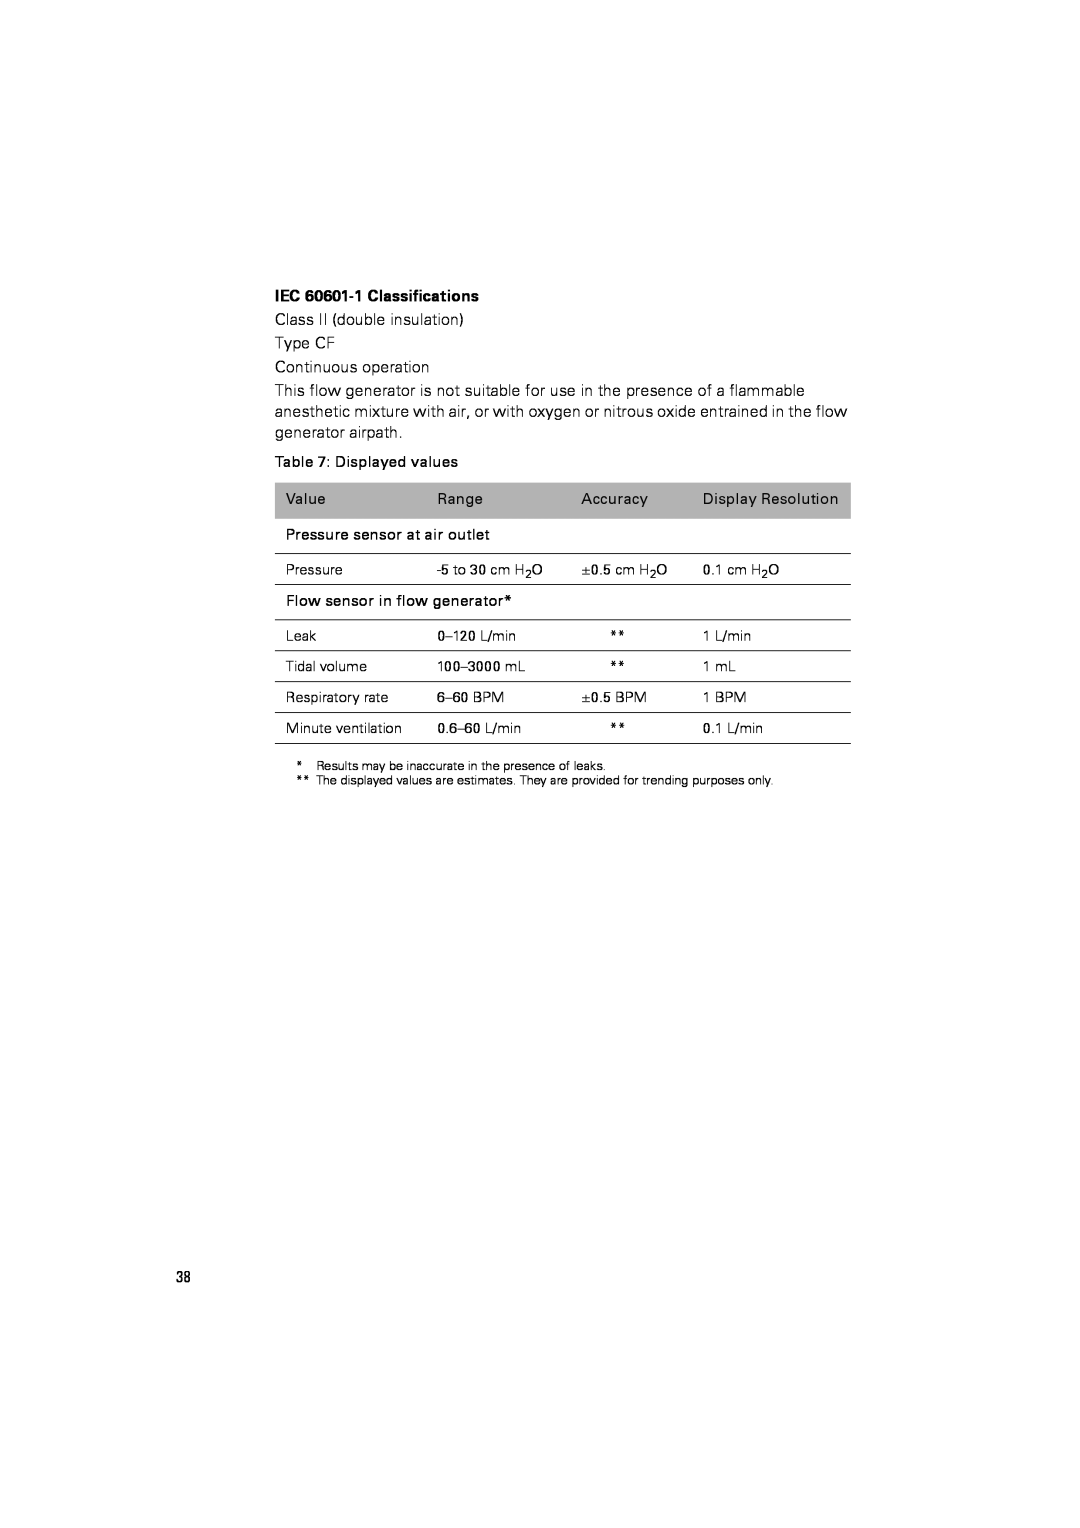 ResMed III ST-A user manual IEC 60601-1Classifications 